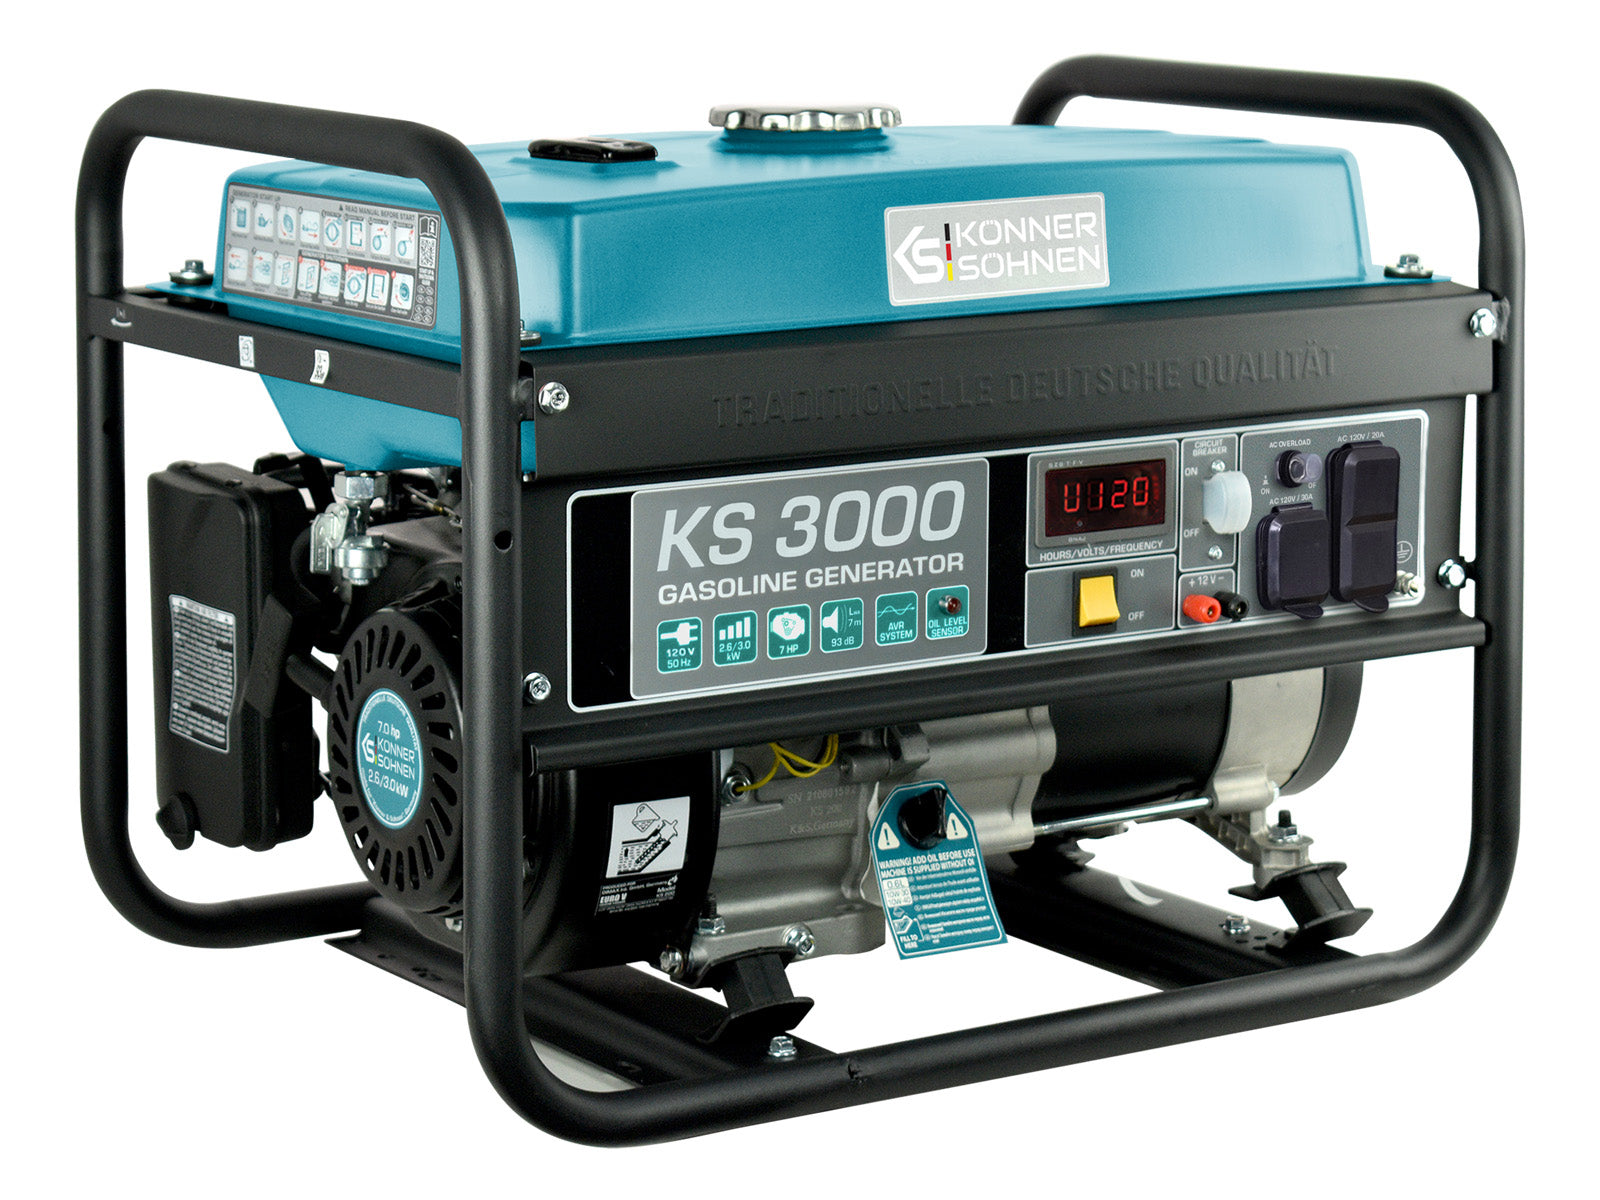 Gasoline generator KS 3000